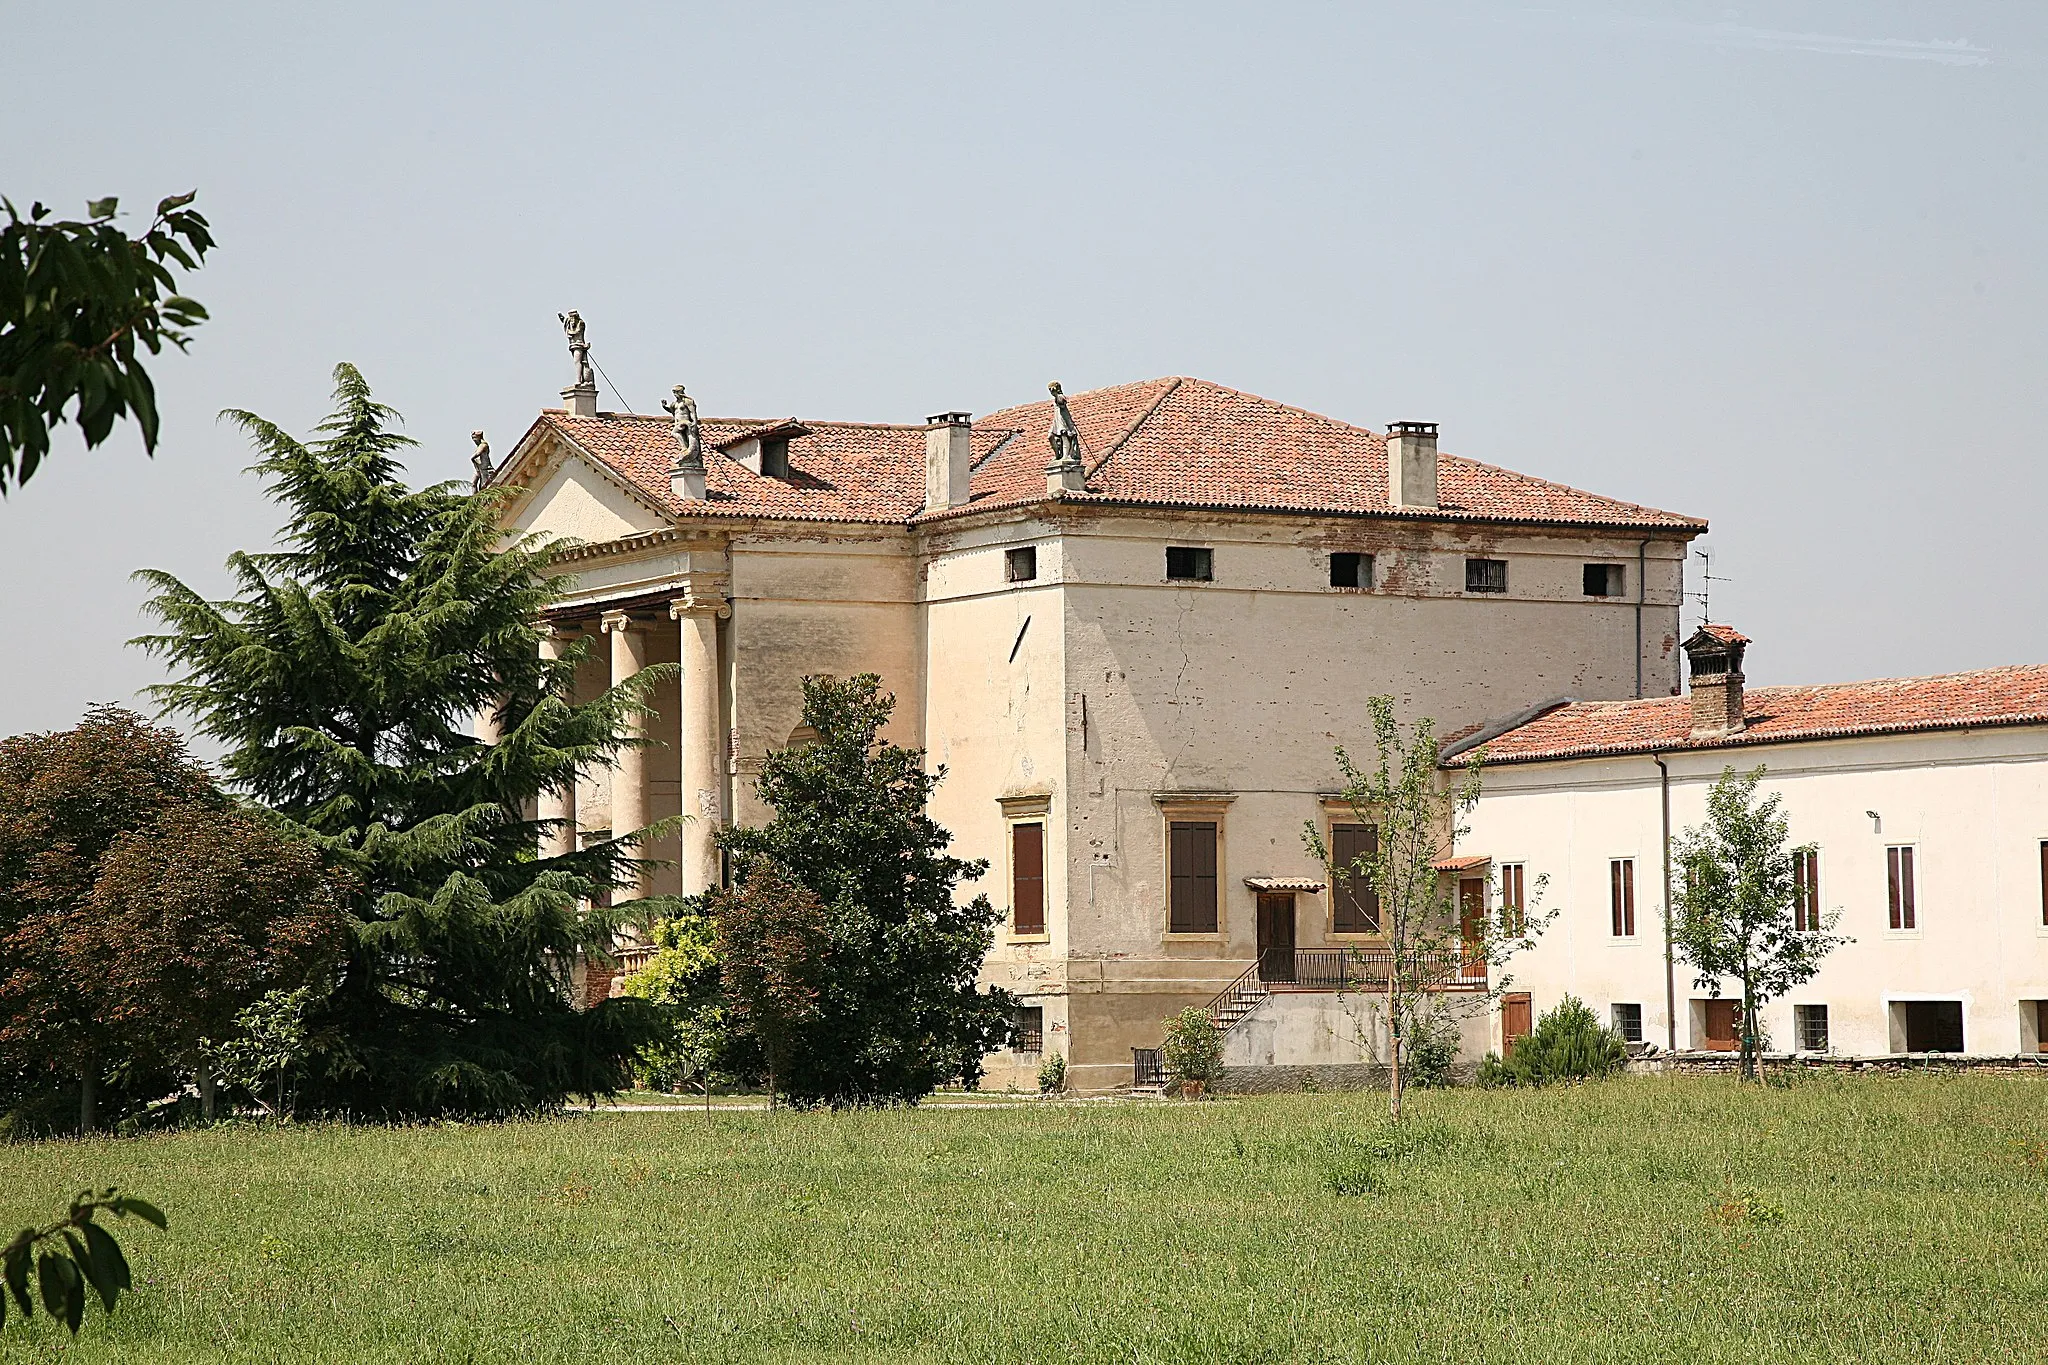 Photo showing: Villa Chiericati by Andrea Palladio